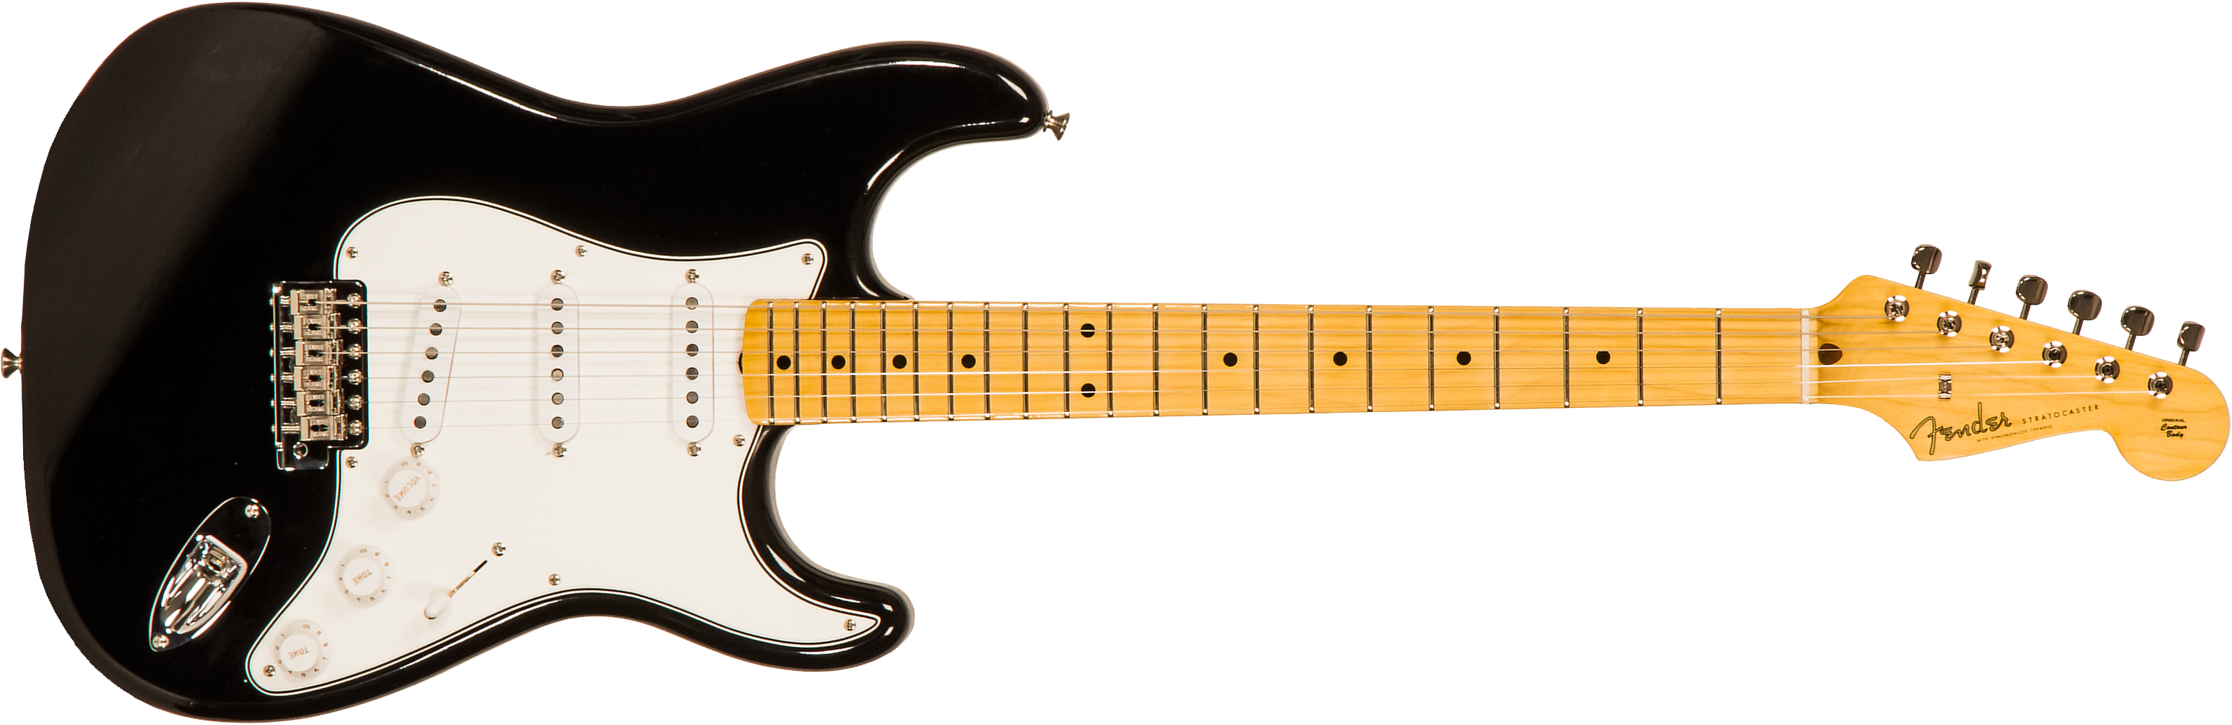 Fender Custom Shop Strat 1958 3s Trem Mn #r113828 - Closet Classic Black - Str shape electric guitar - Main picture